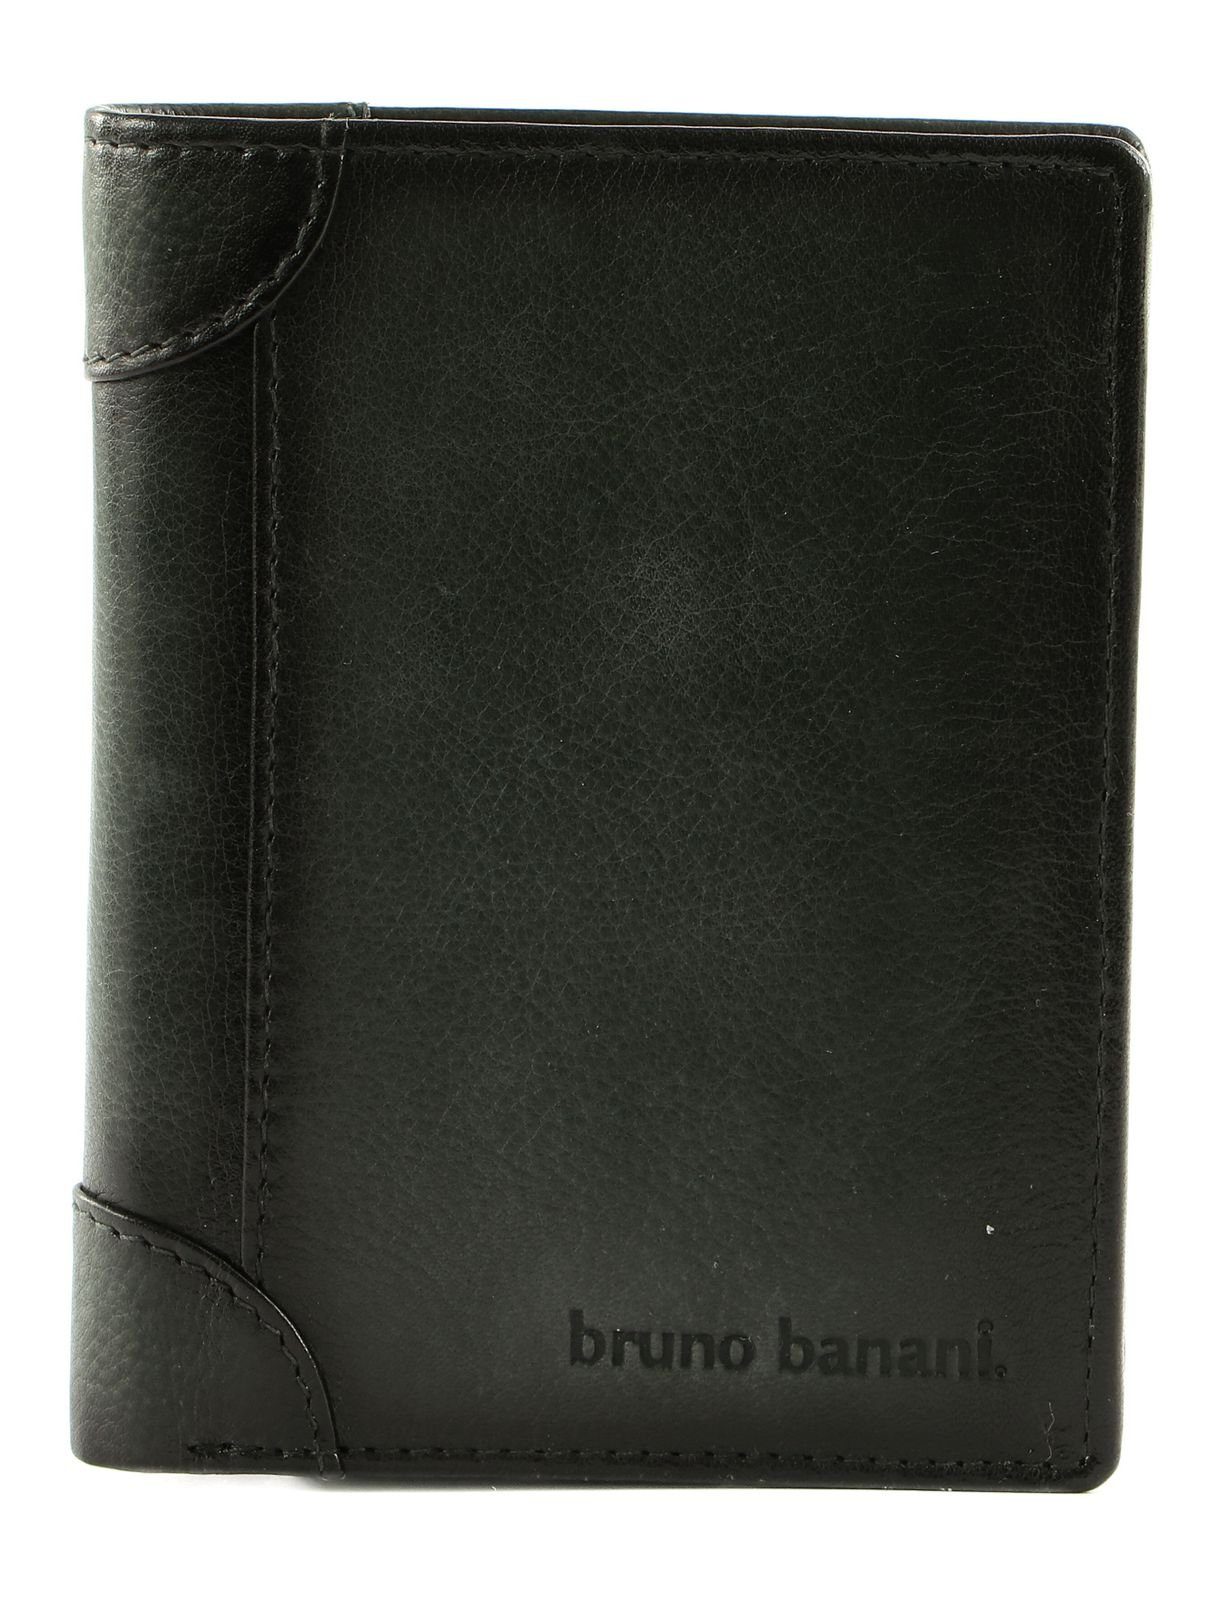 Black Banani Geldbörse Bruno